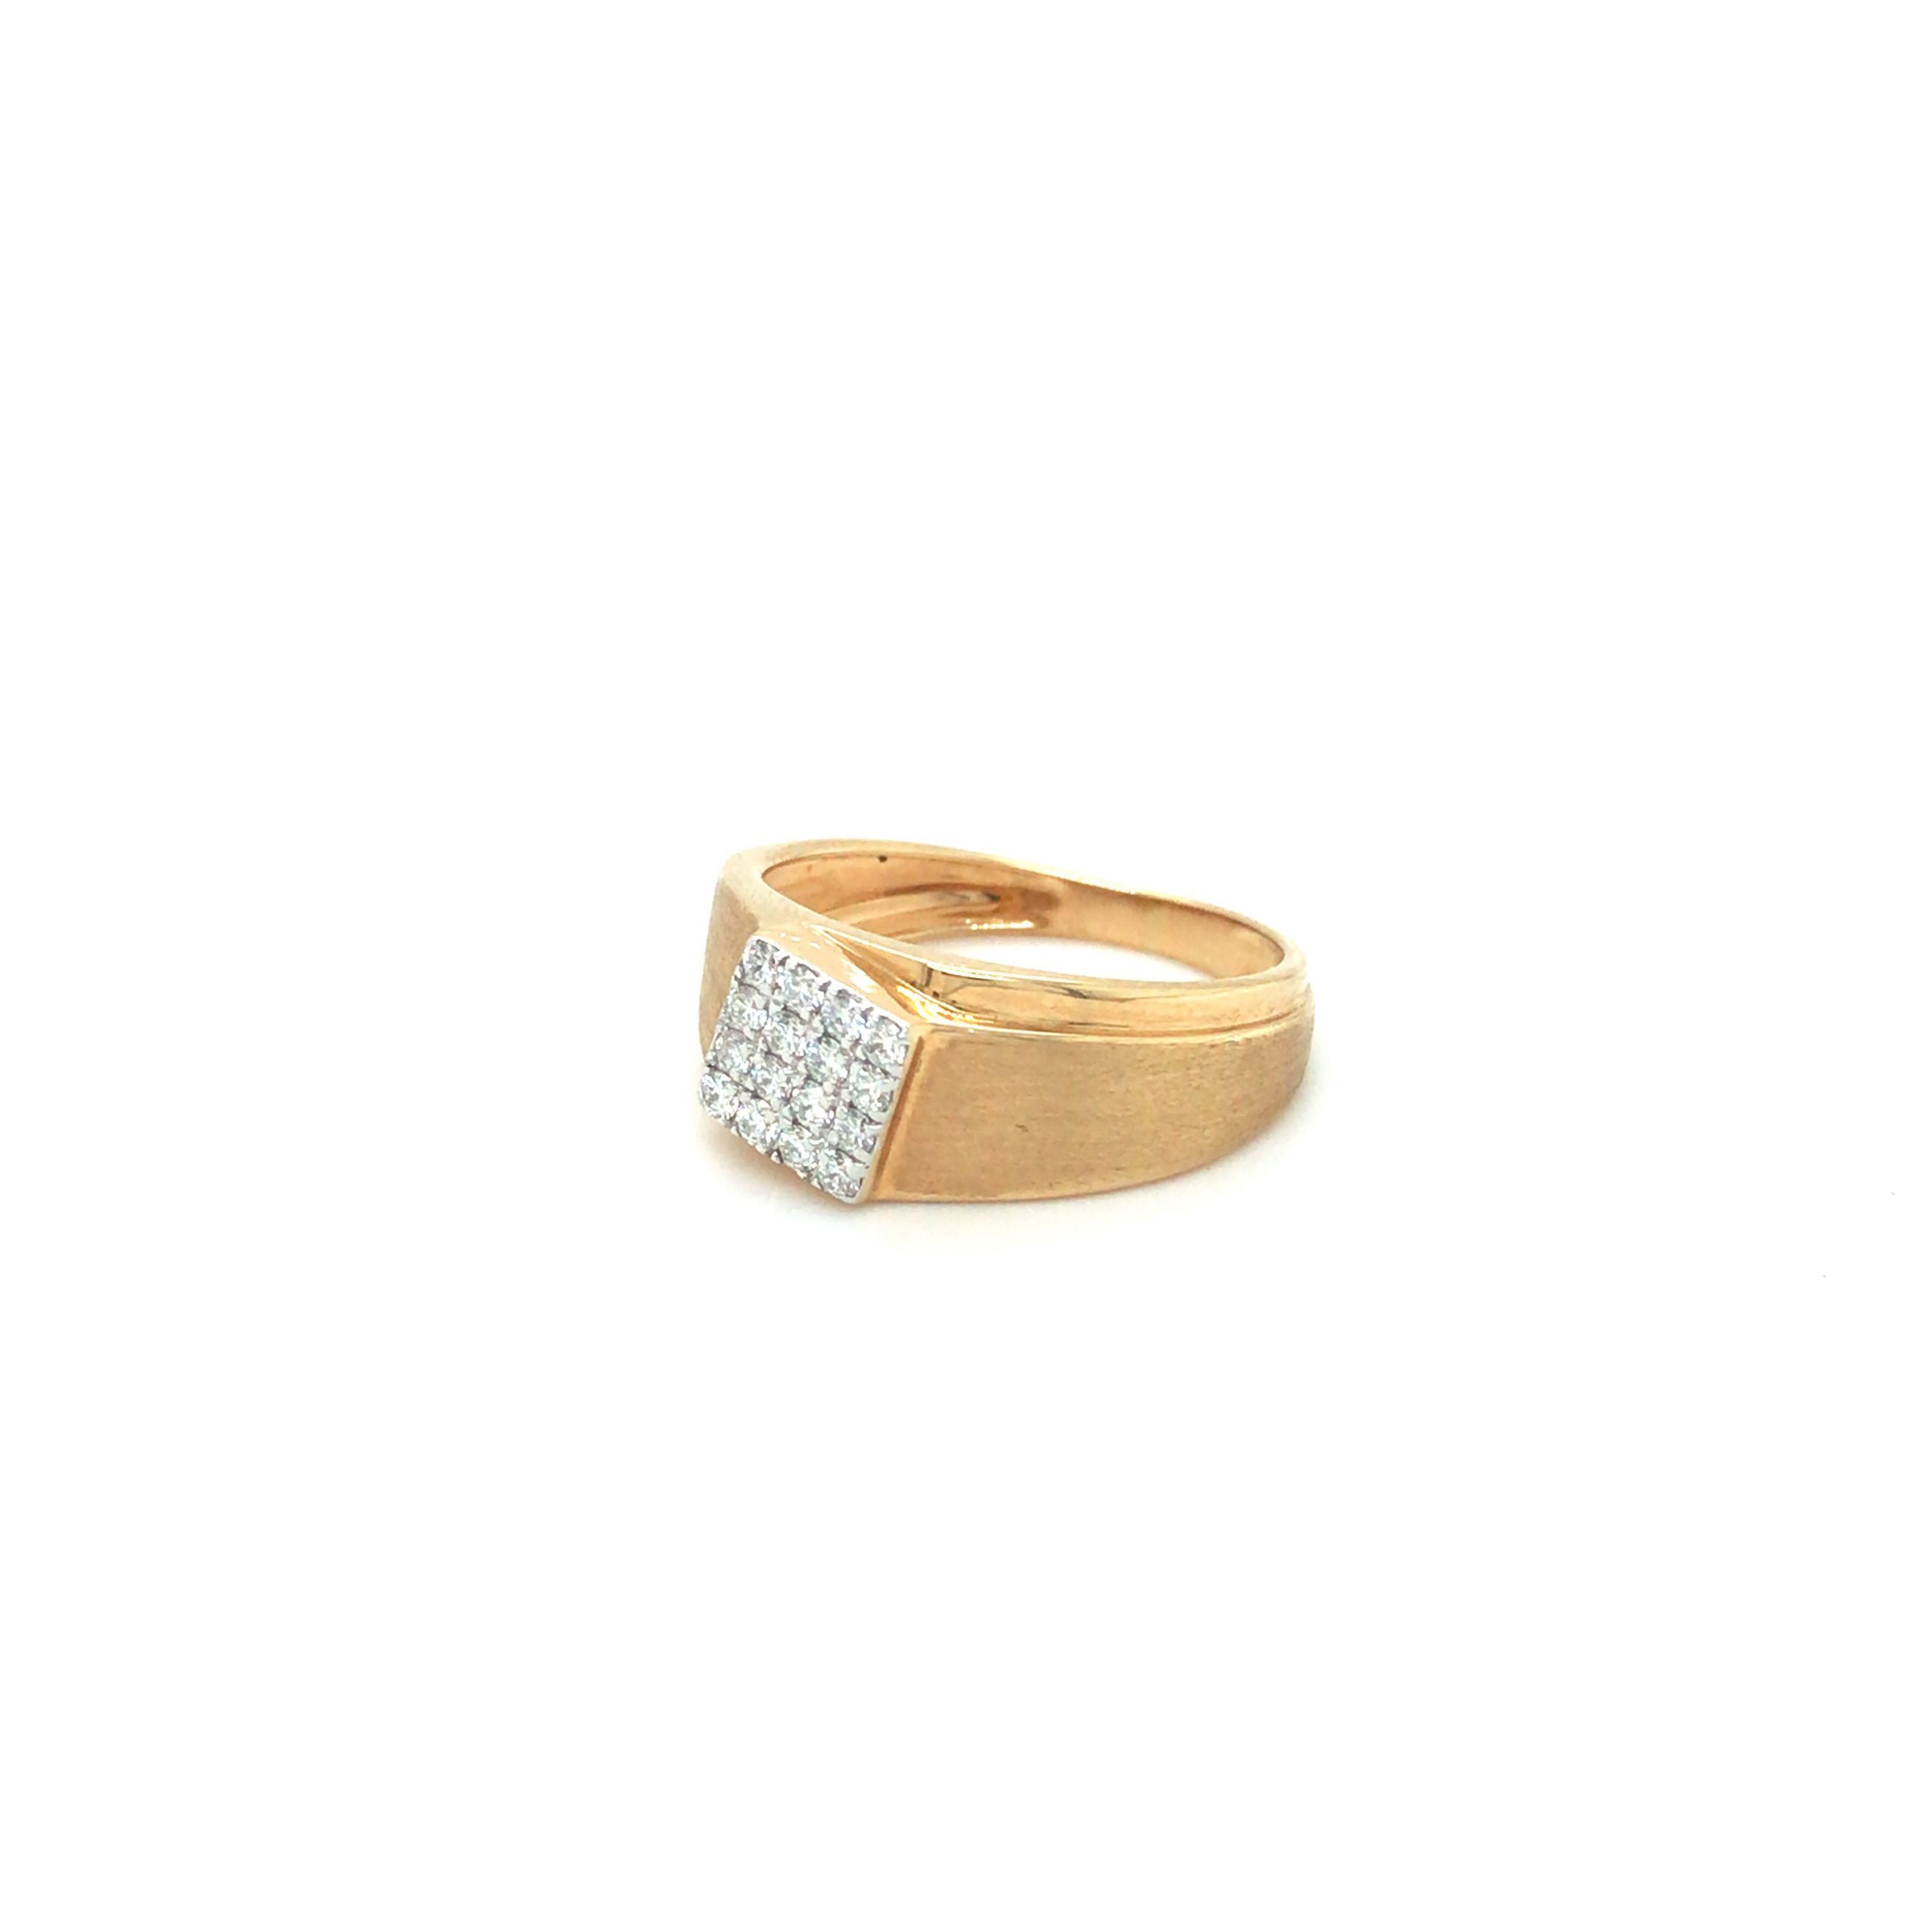 3,5mm diamond solitaire gold ring - Sansoeurs